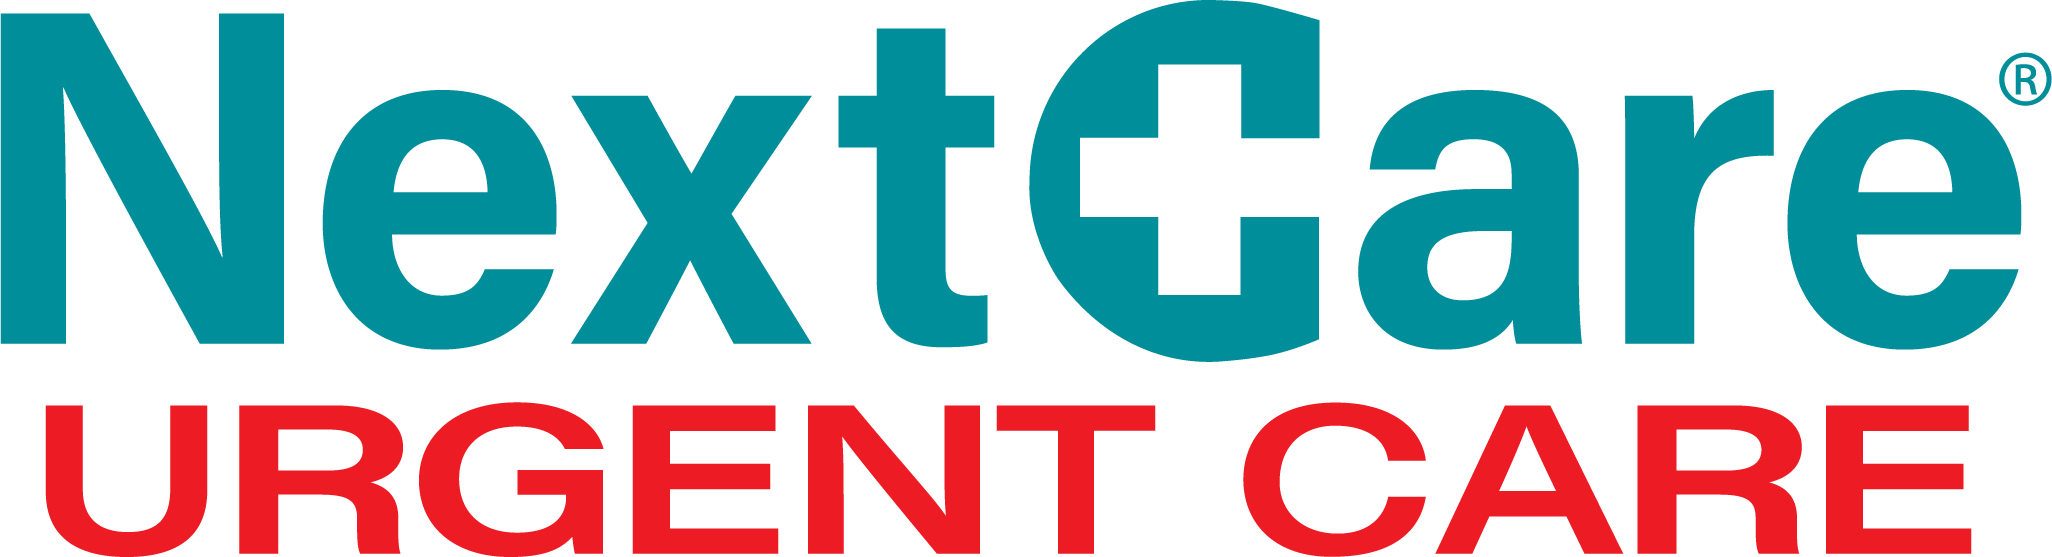 NextCare Urgent Care - East Broadway Logo